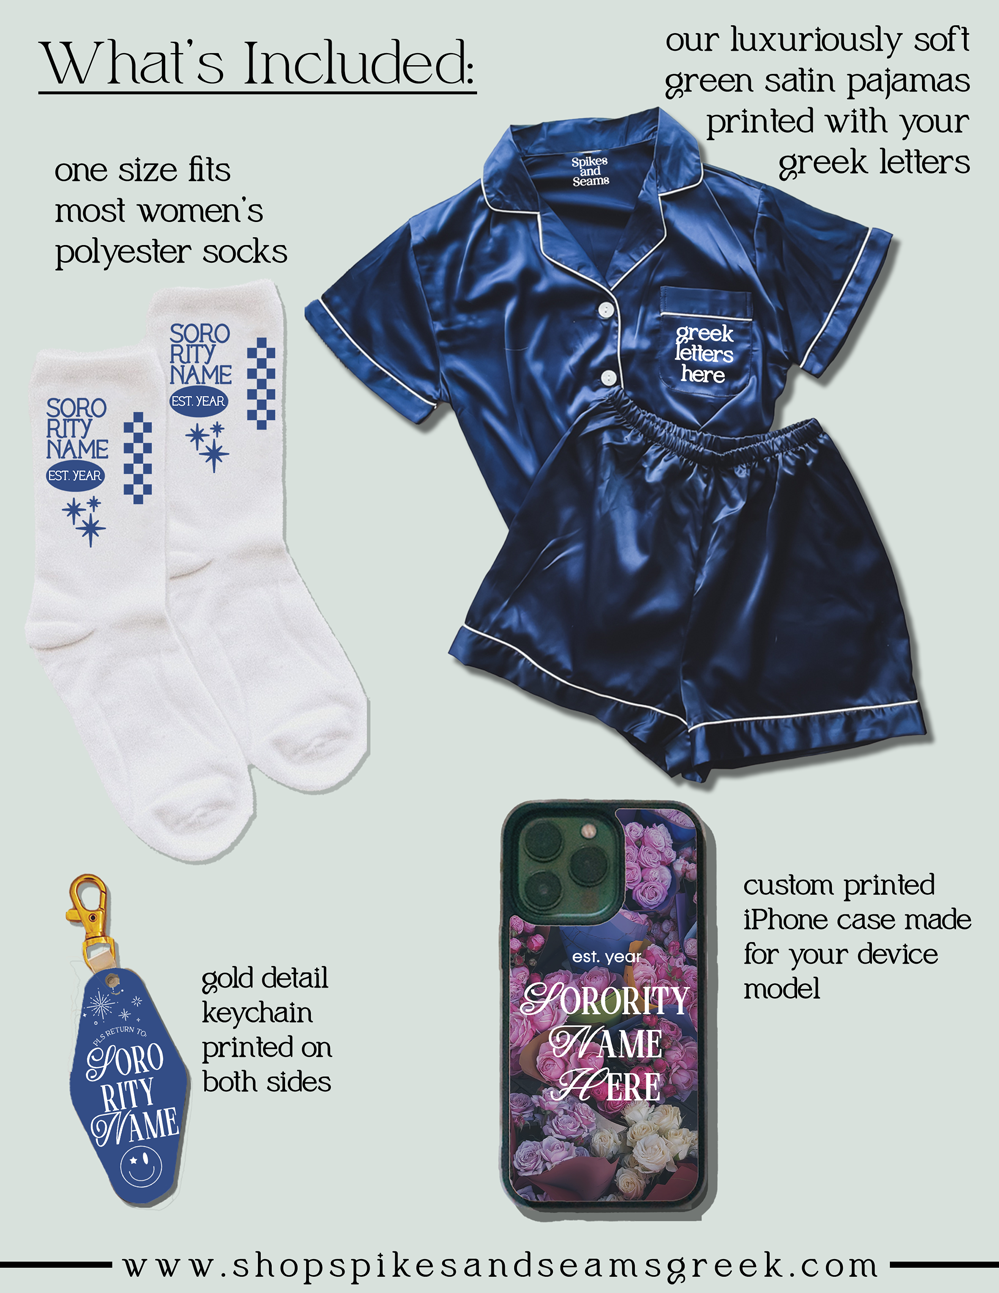 Navy Pajamas Gift Box - Alpha Gamma Delta